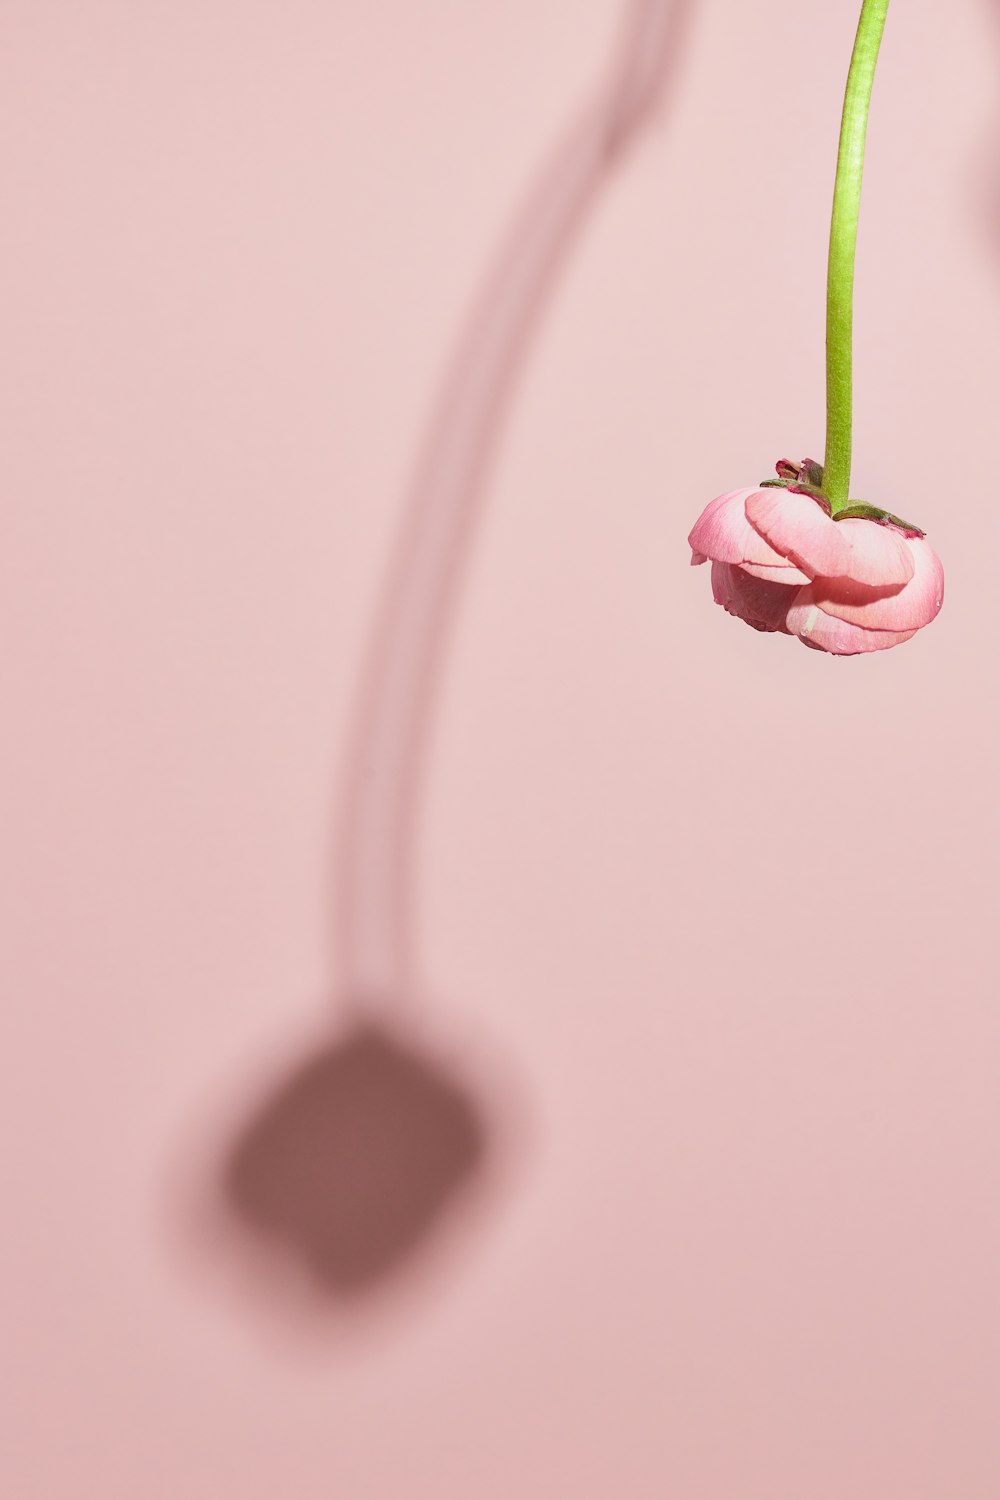 un fiore rosa con uno stelo verde su uno sfondo rosa